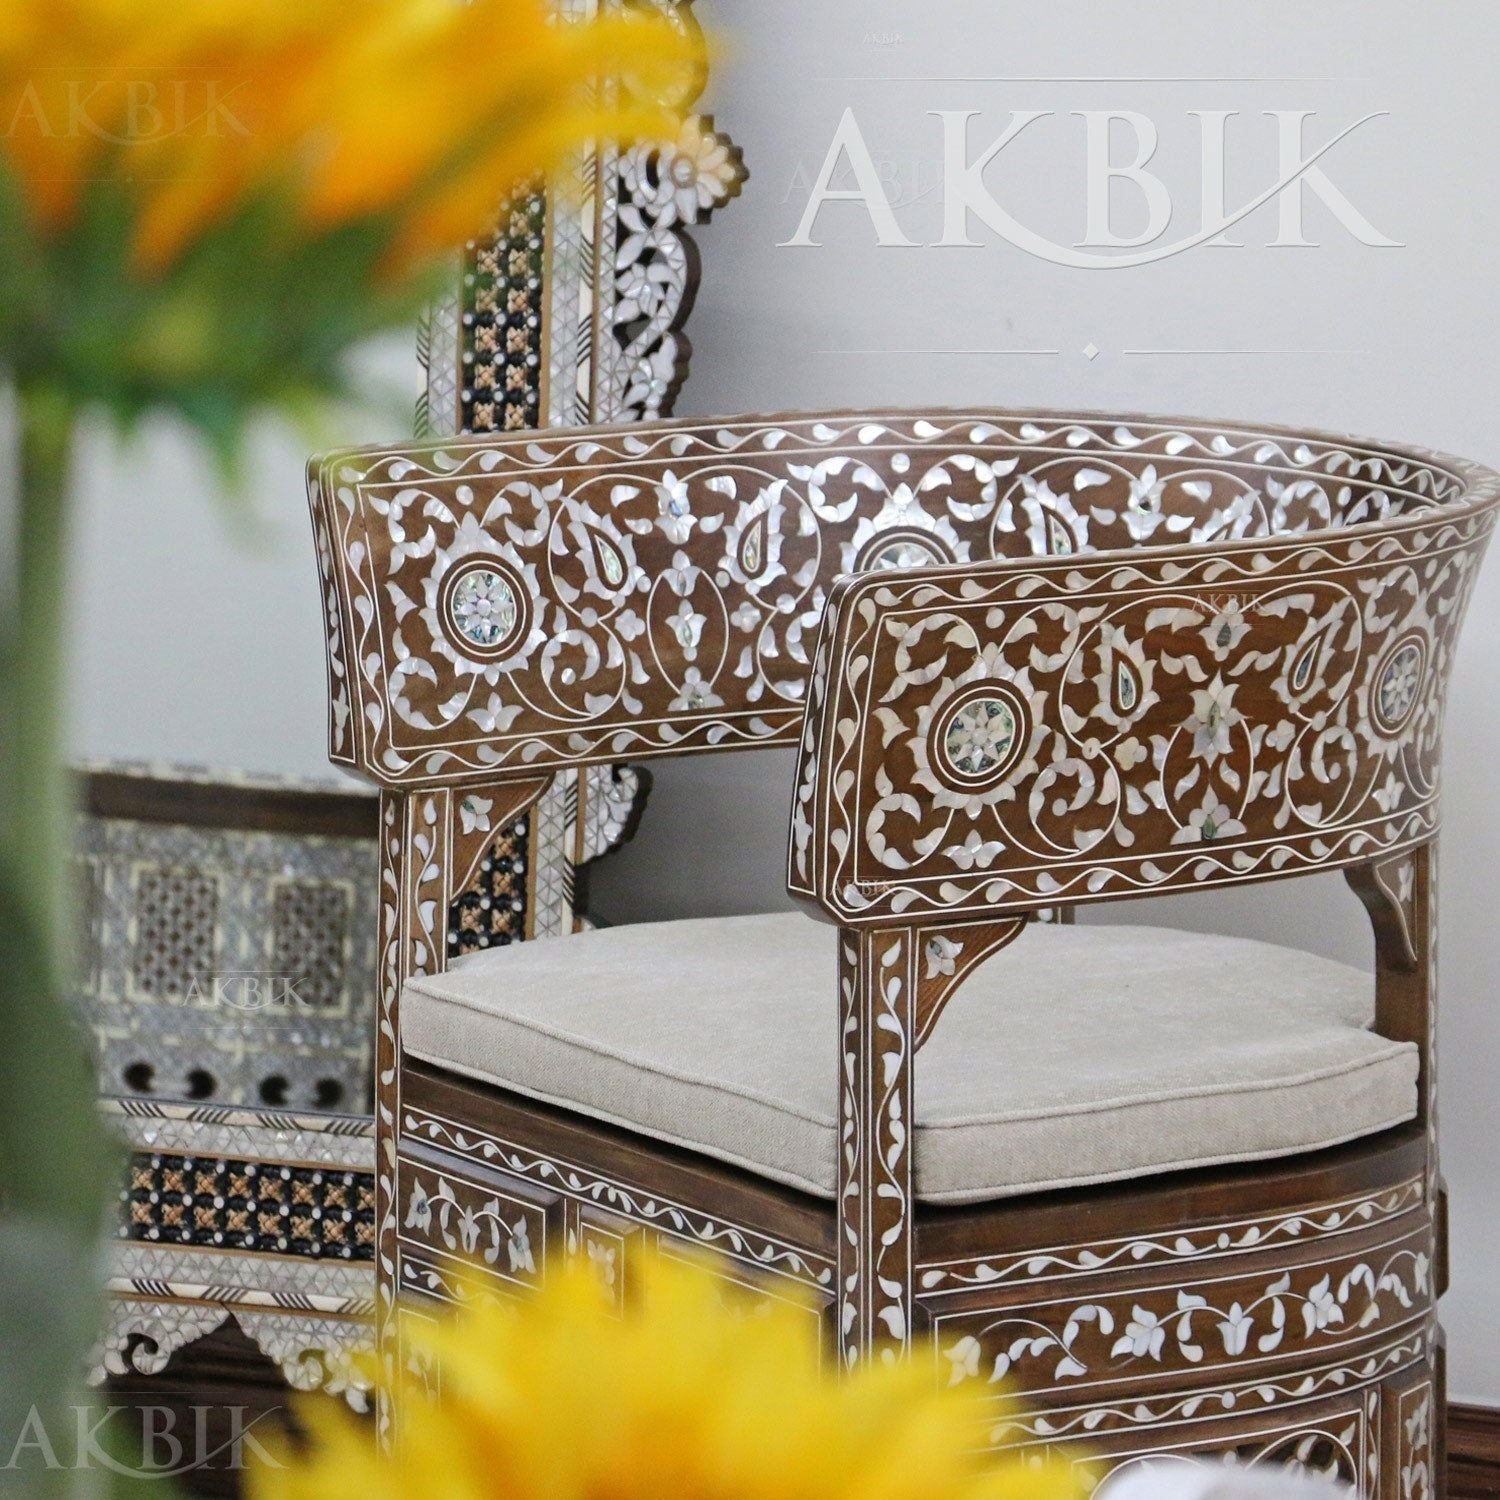 MOTHER OF PEARL CHAIR - AKBIK Furniture & Design